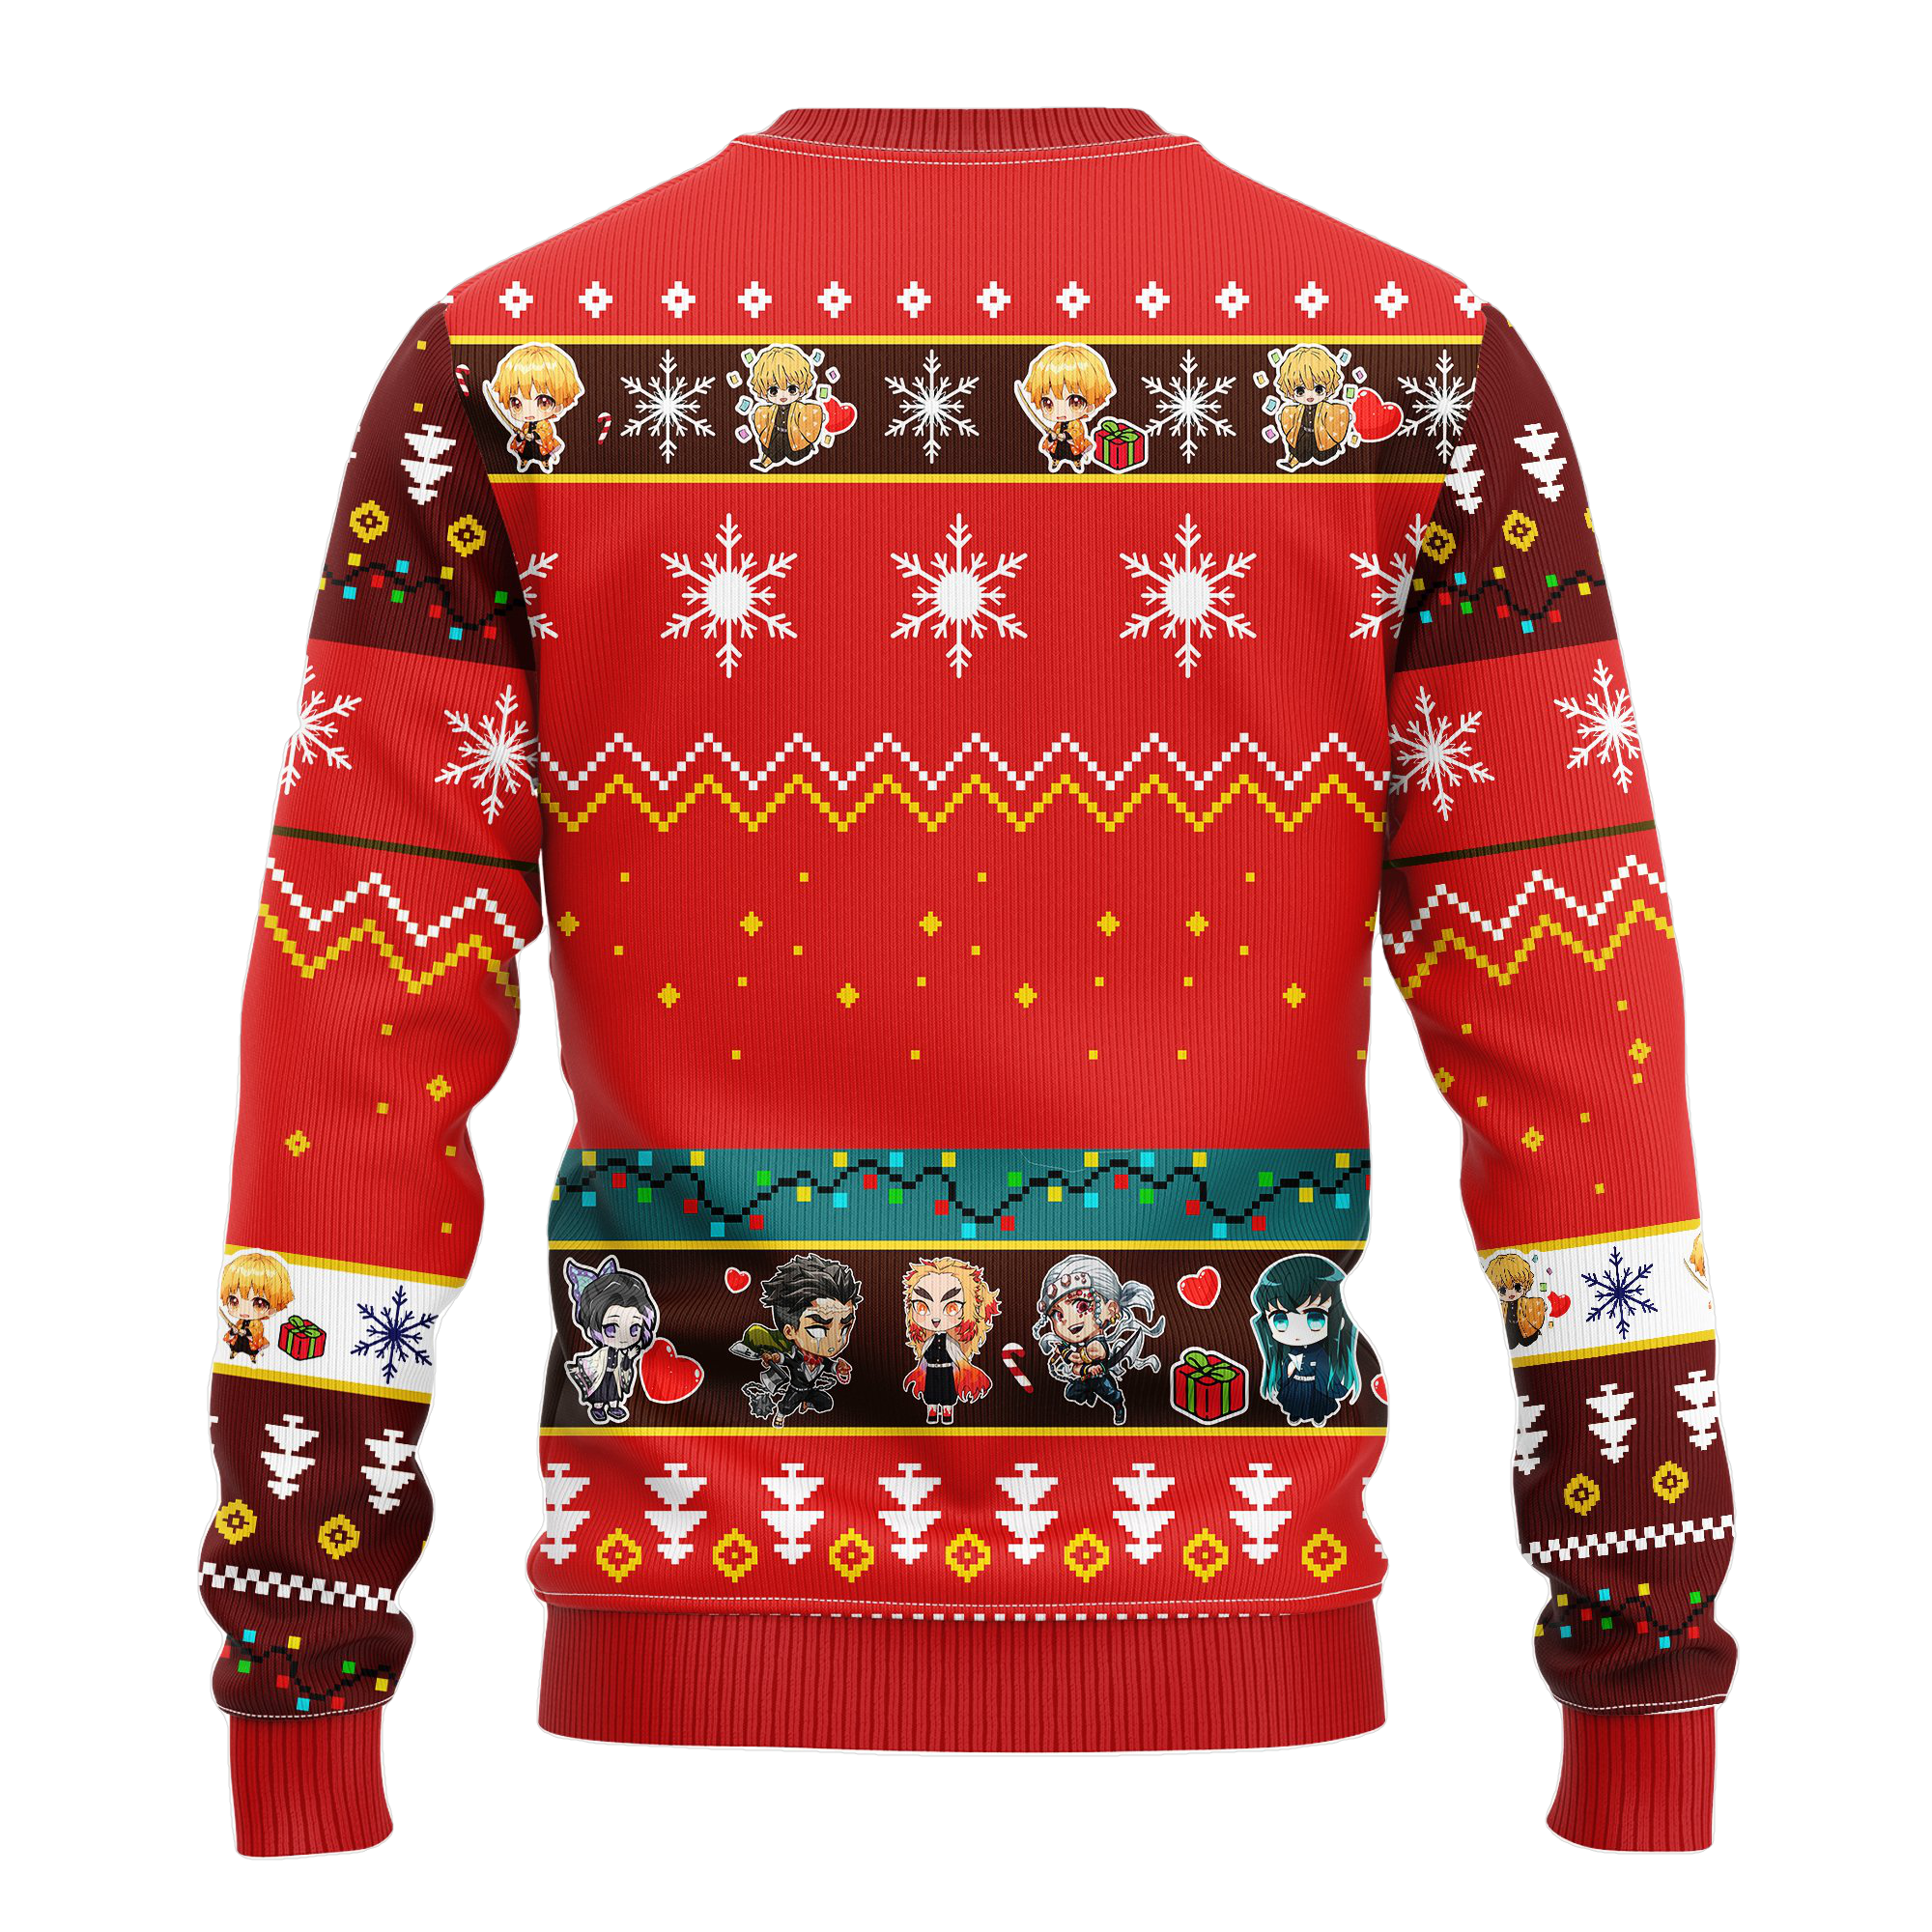 Agatsuma Zenitsu Demon Slayer Anime Ugly Christmas Sweater Red 1 Amazing Gift Idea Thanksgiving Gift